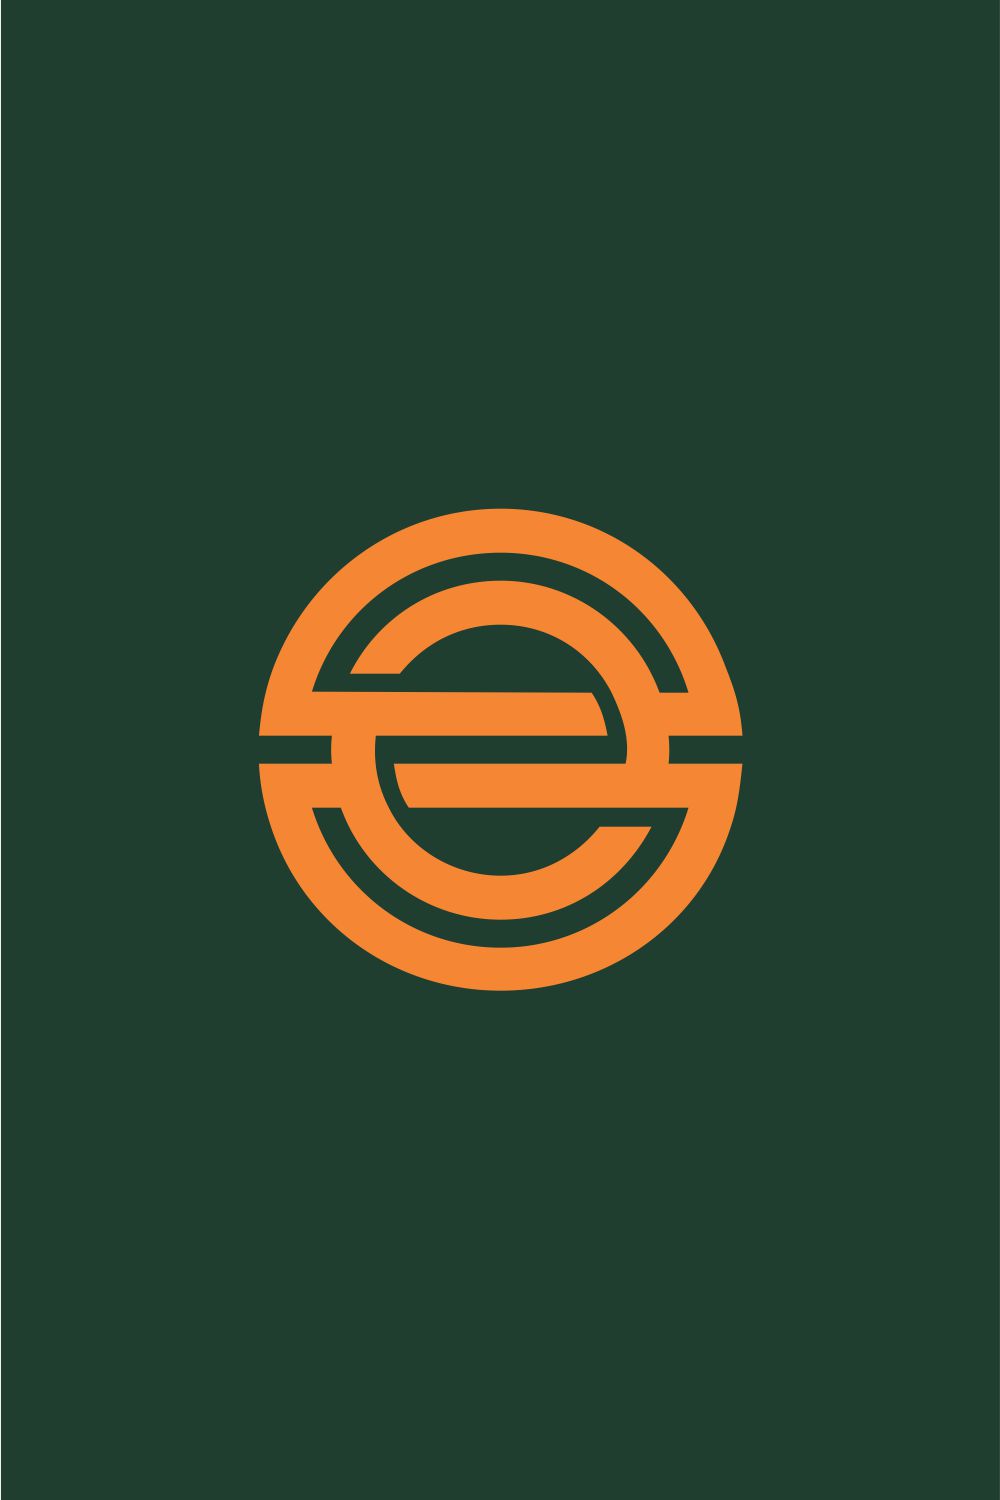 lettering logo (o) - $6 pinterest preview image.